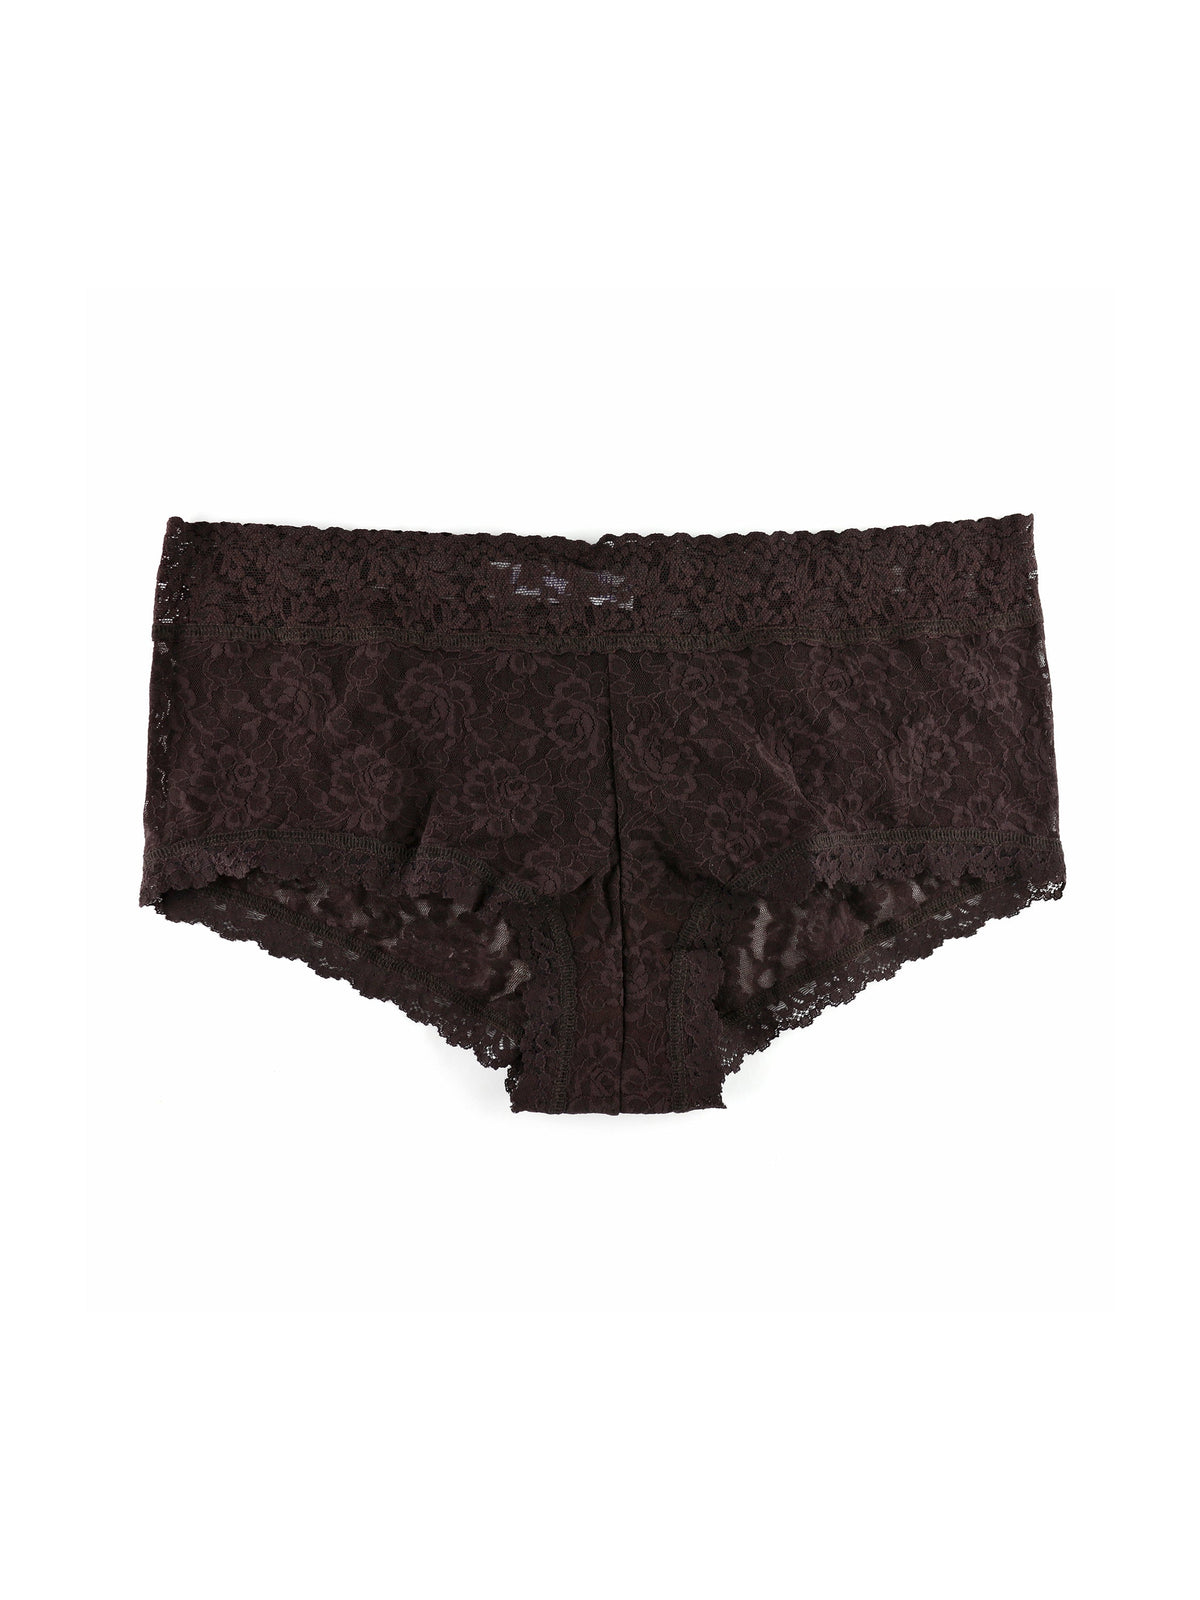 Plus Size Signature Lace Boyshort Chocolat Noir Brown | Hanky Panky